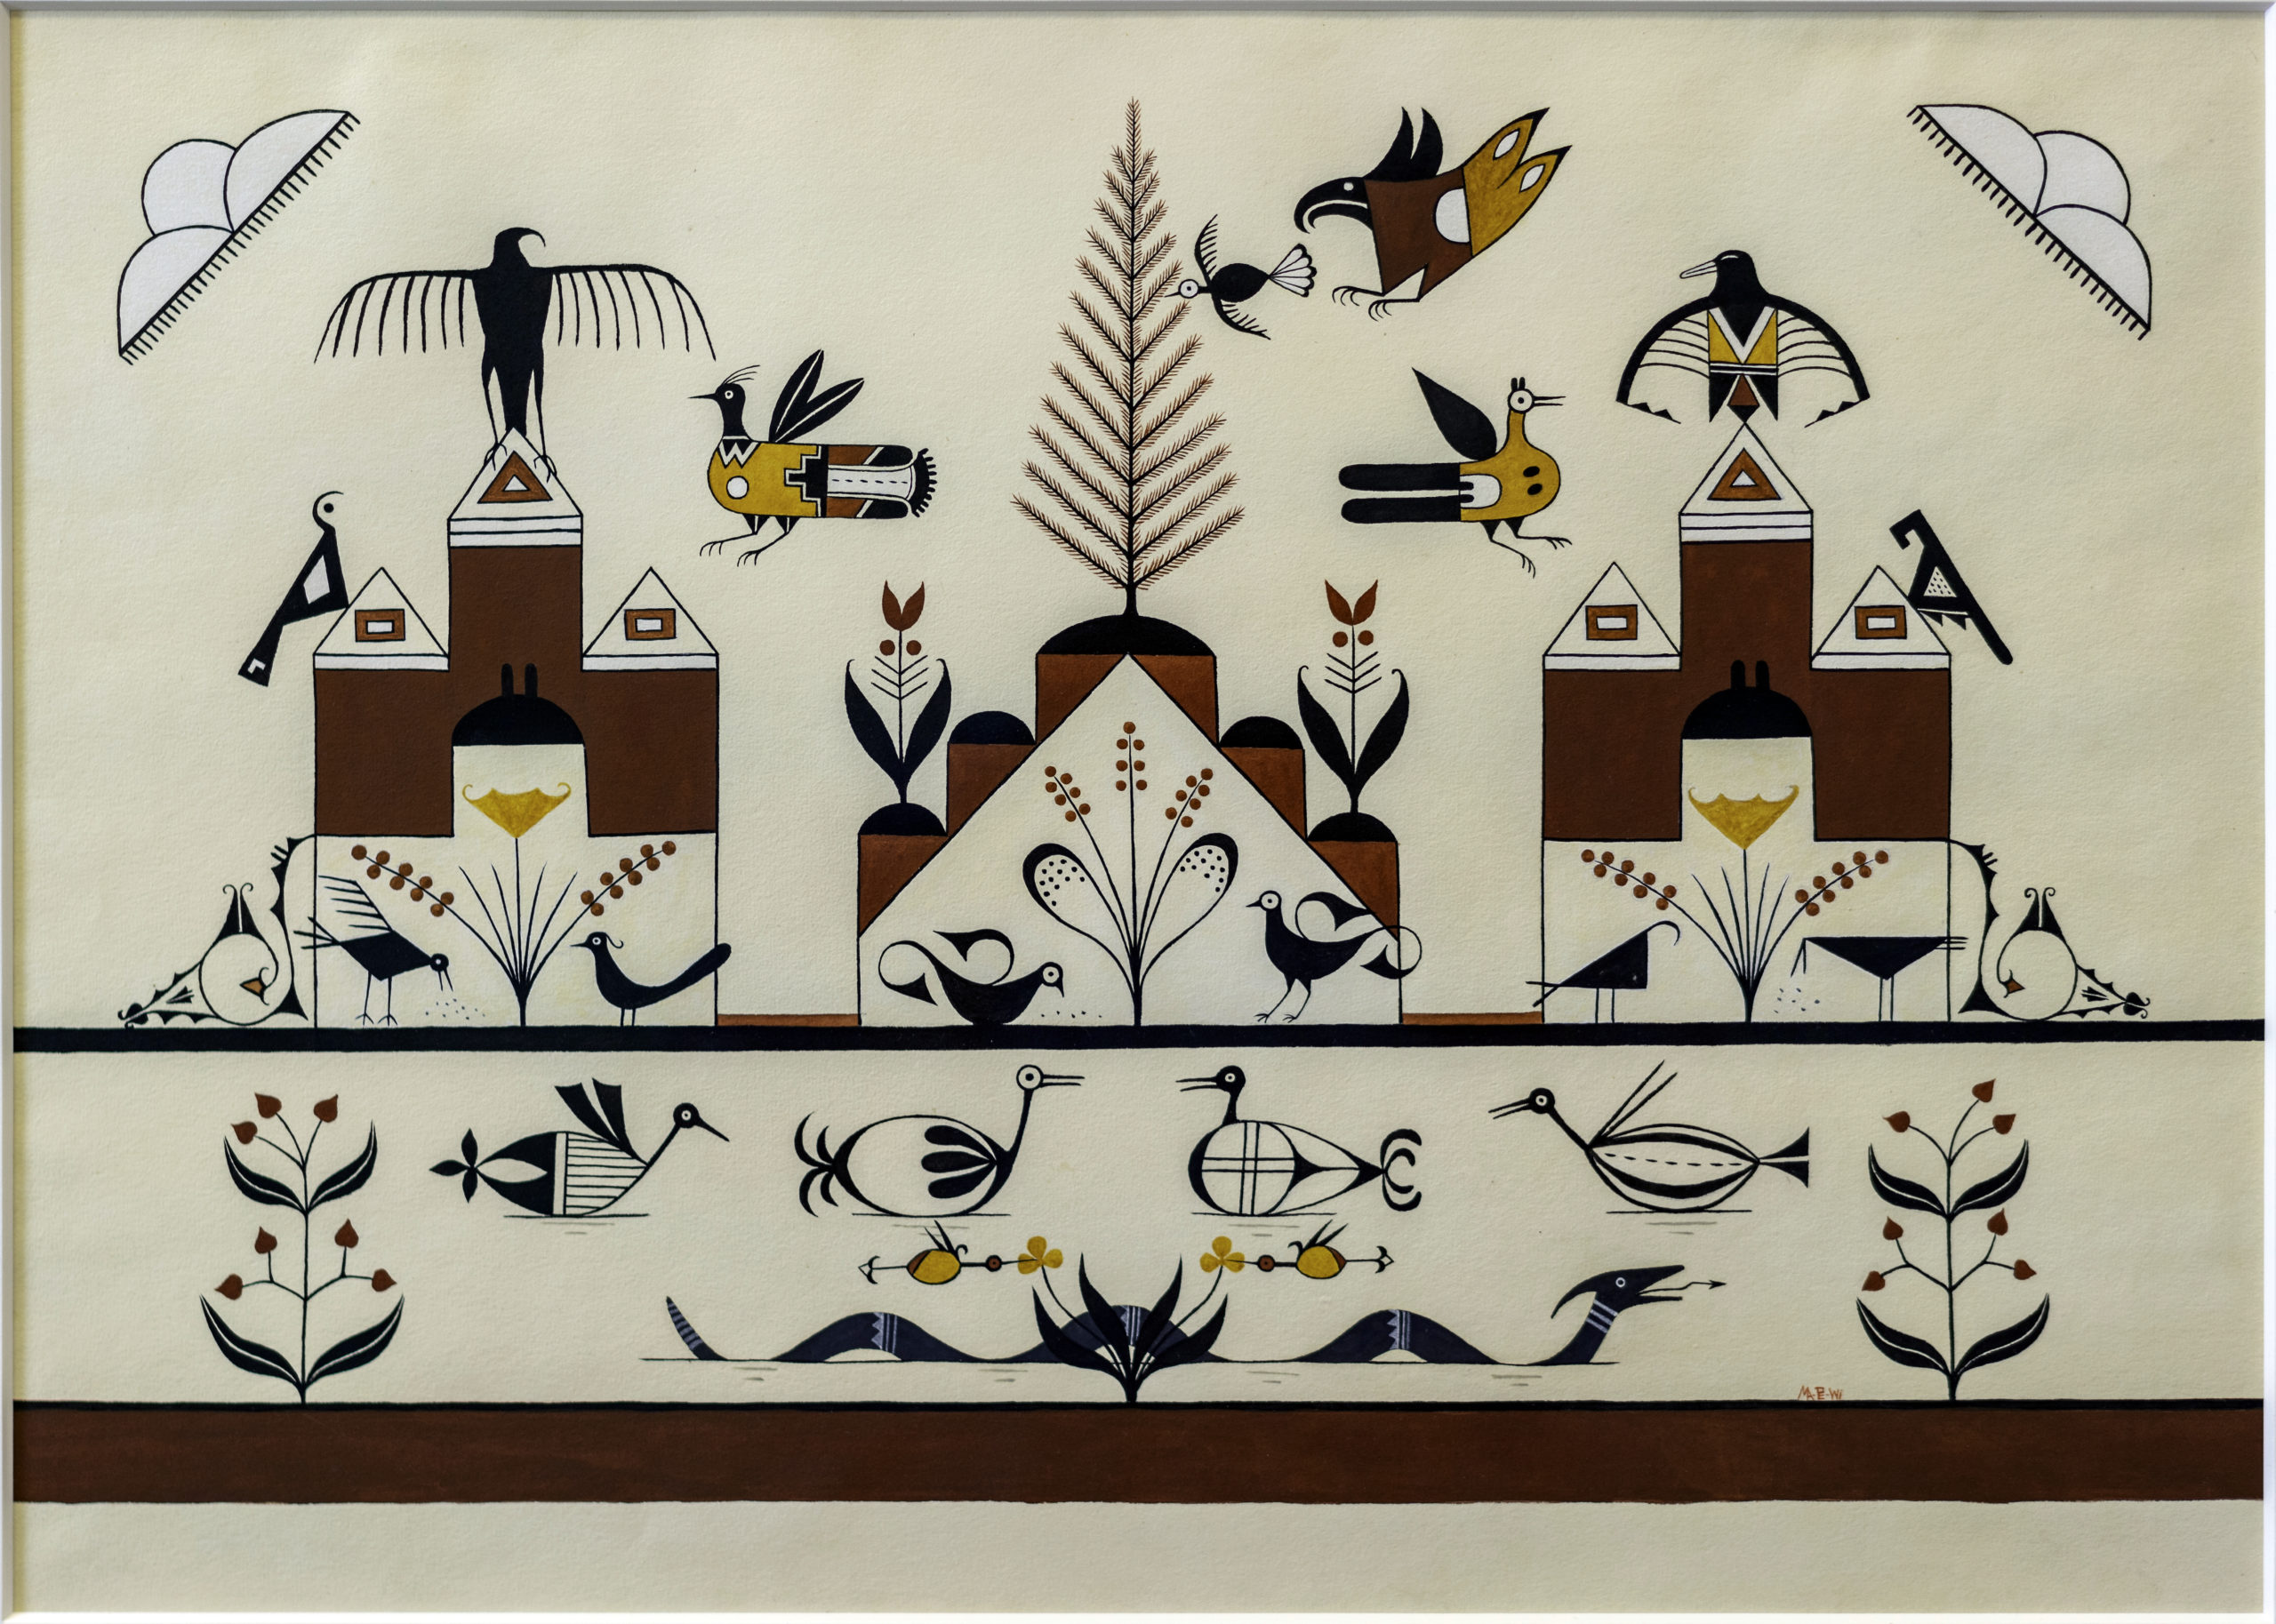 Velino Shije Herrera (Ma Pe Wi), Design, Tree and Birds, c. 1930, watercolor on paper, 25.25 x 17.75 inches (Newark Museum of Art, Gift of Amelia Elizabeth White, 1937, 37.216)